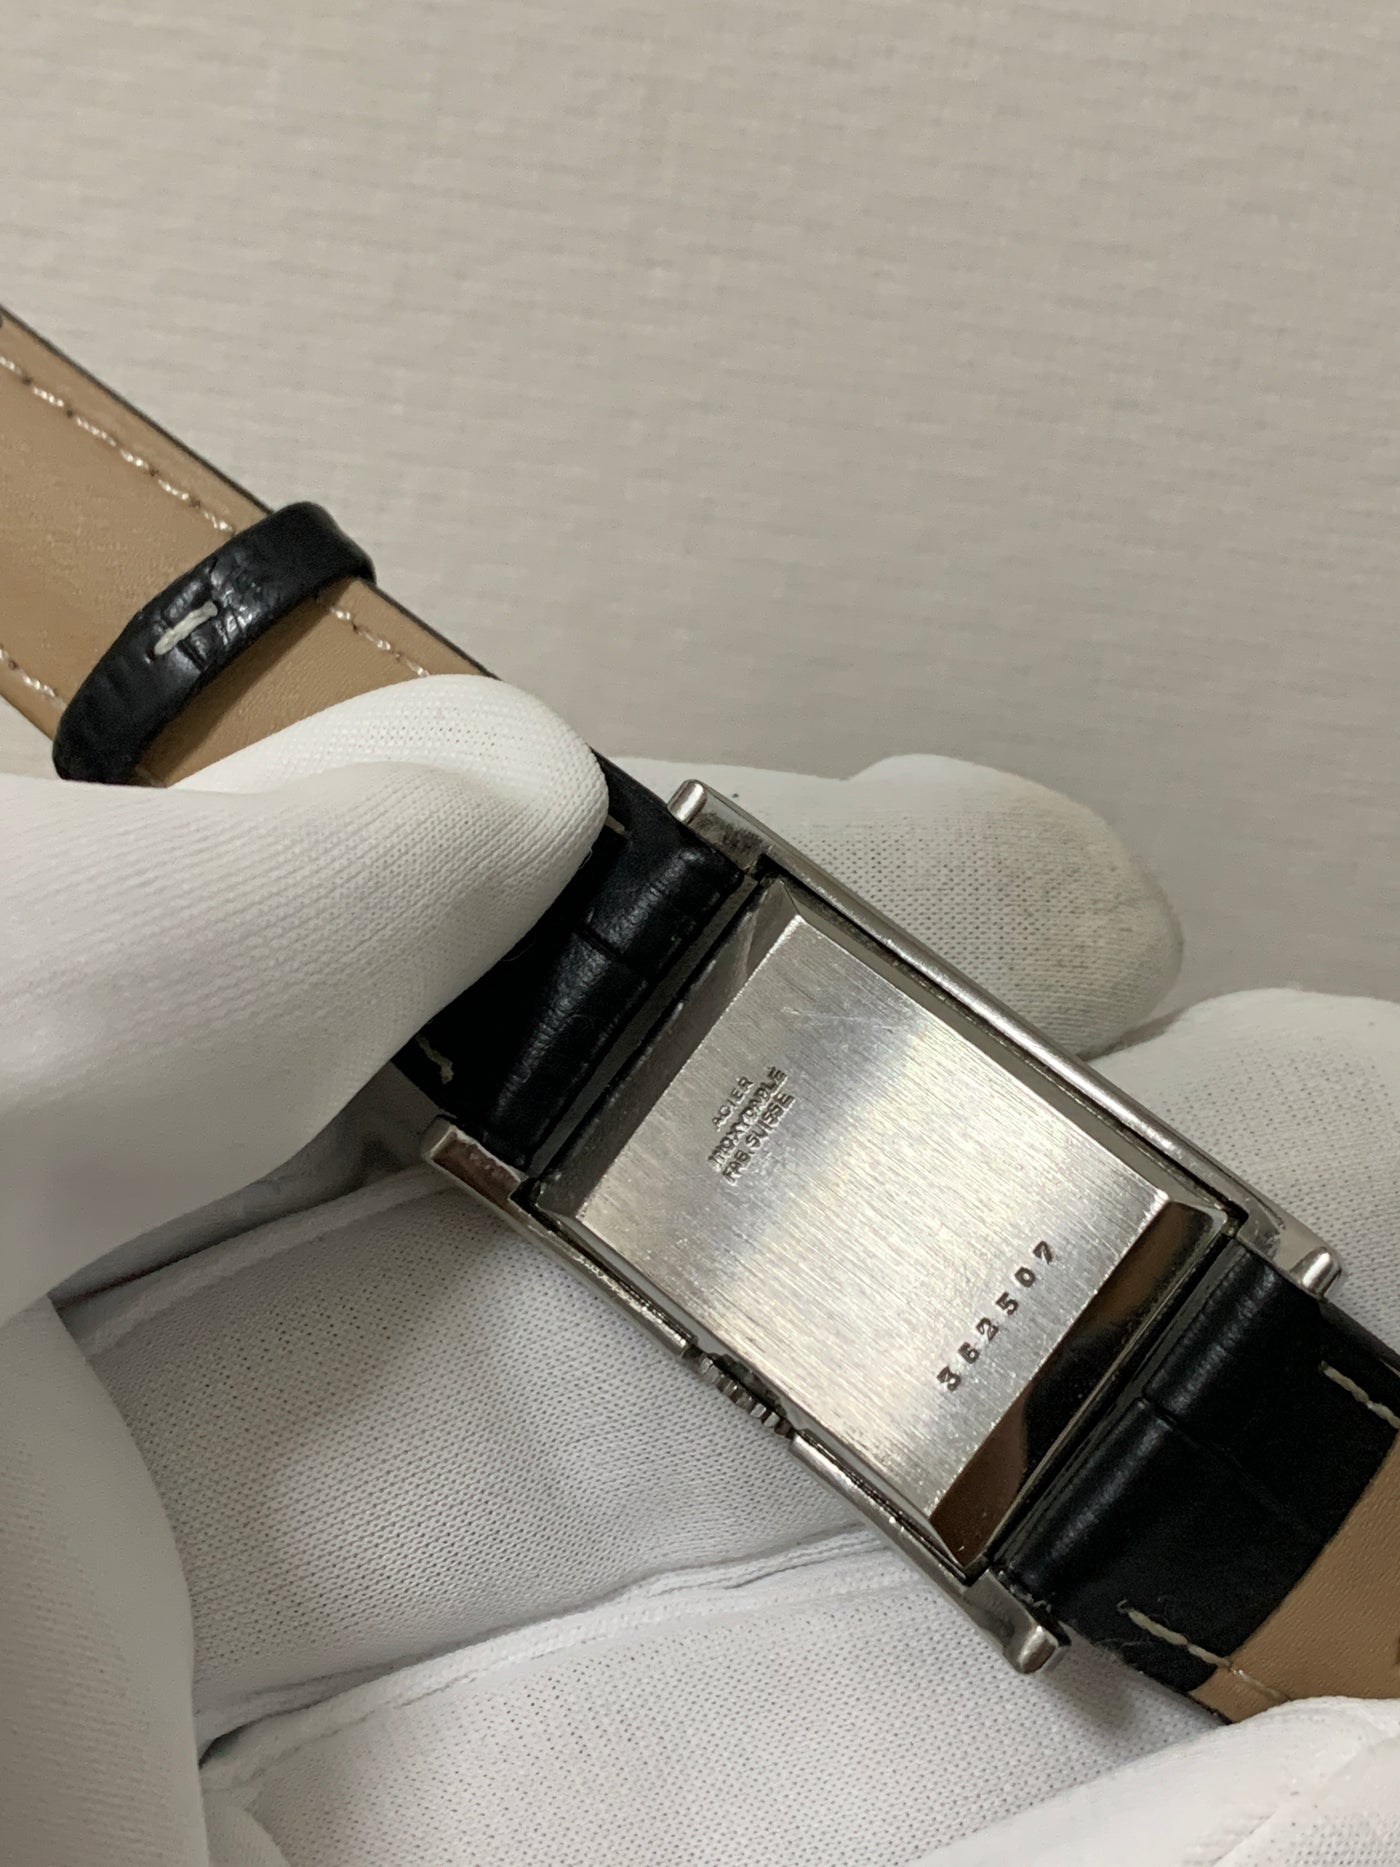 1943 Jaeger-LeCoultre rectangular hand-wound vintage watch